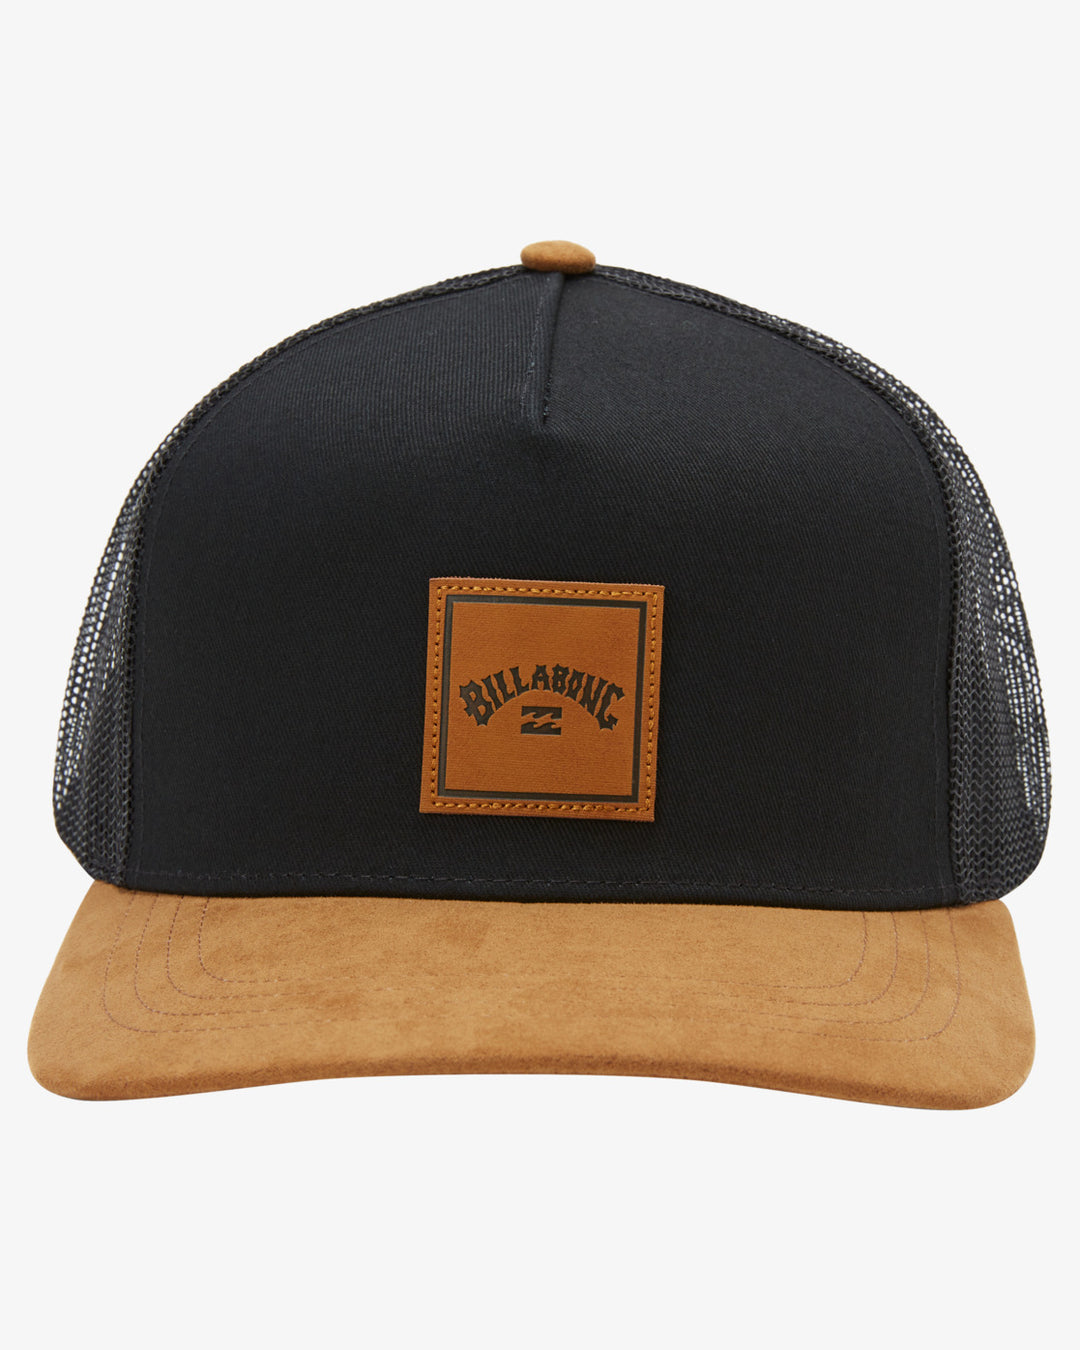 Billabong Stacked Sun Boardshop Diego Black/Tan - Hat – Trucker